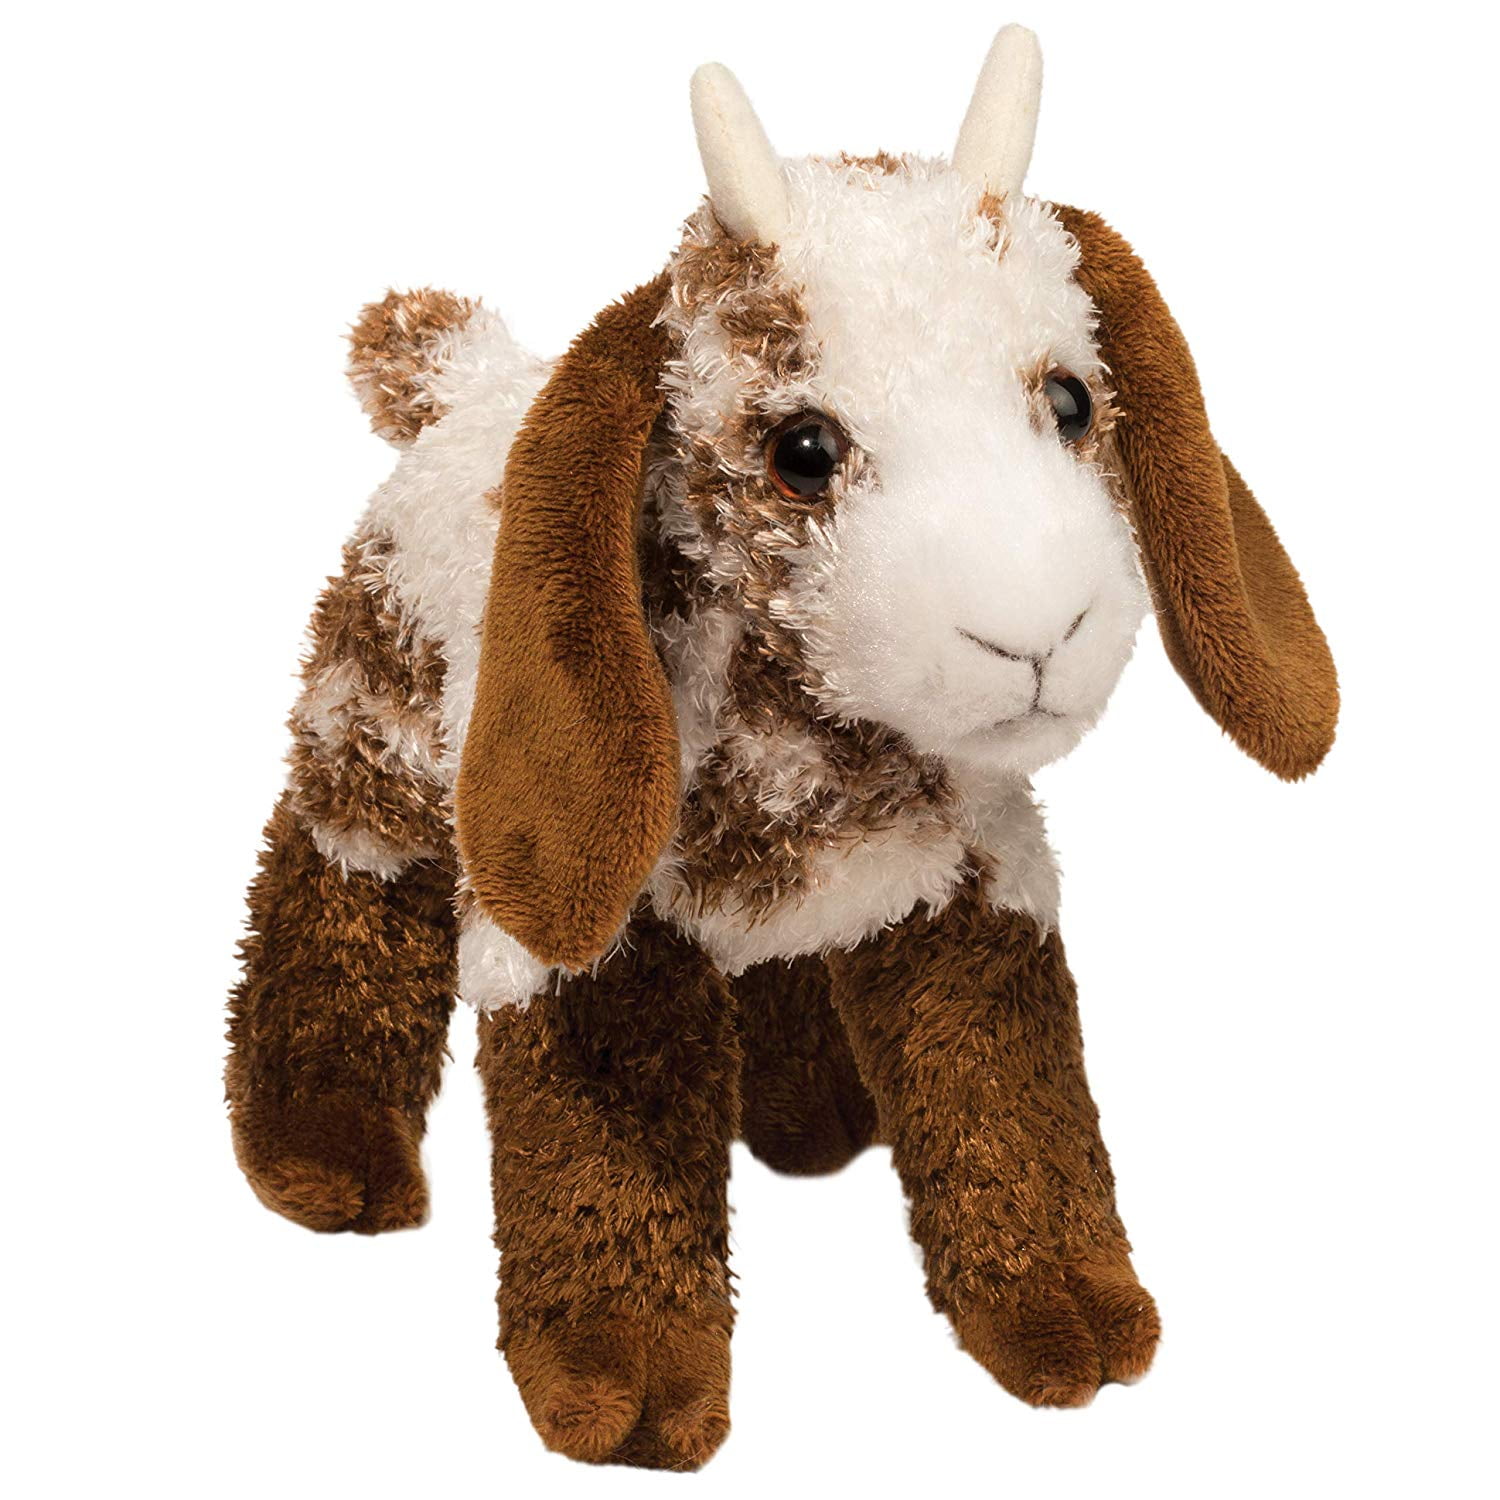 BRADY the Plush GOAT Stuffed Animal by Douglas Cuddle Toys #4519 